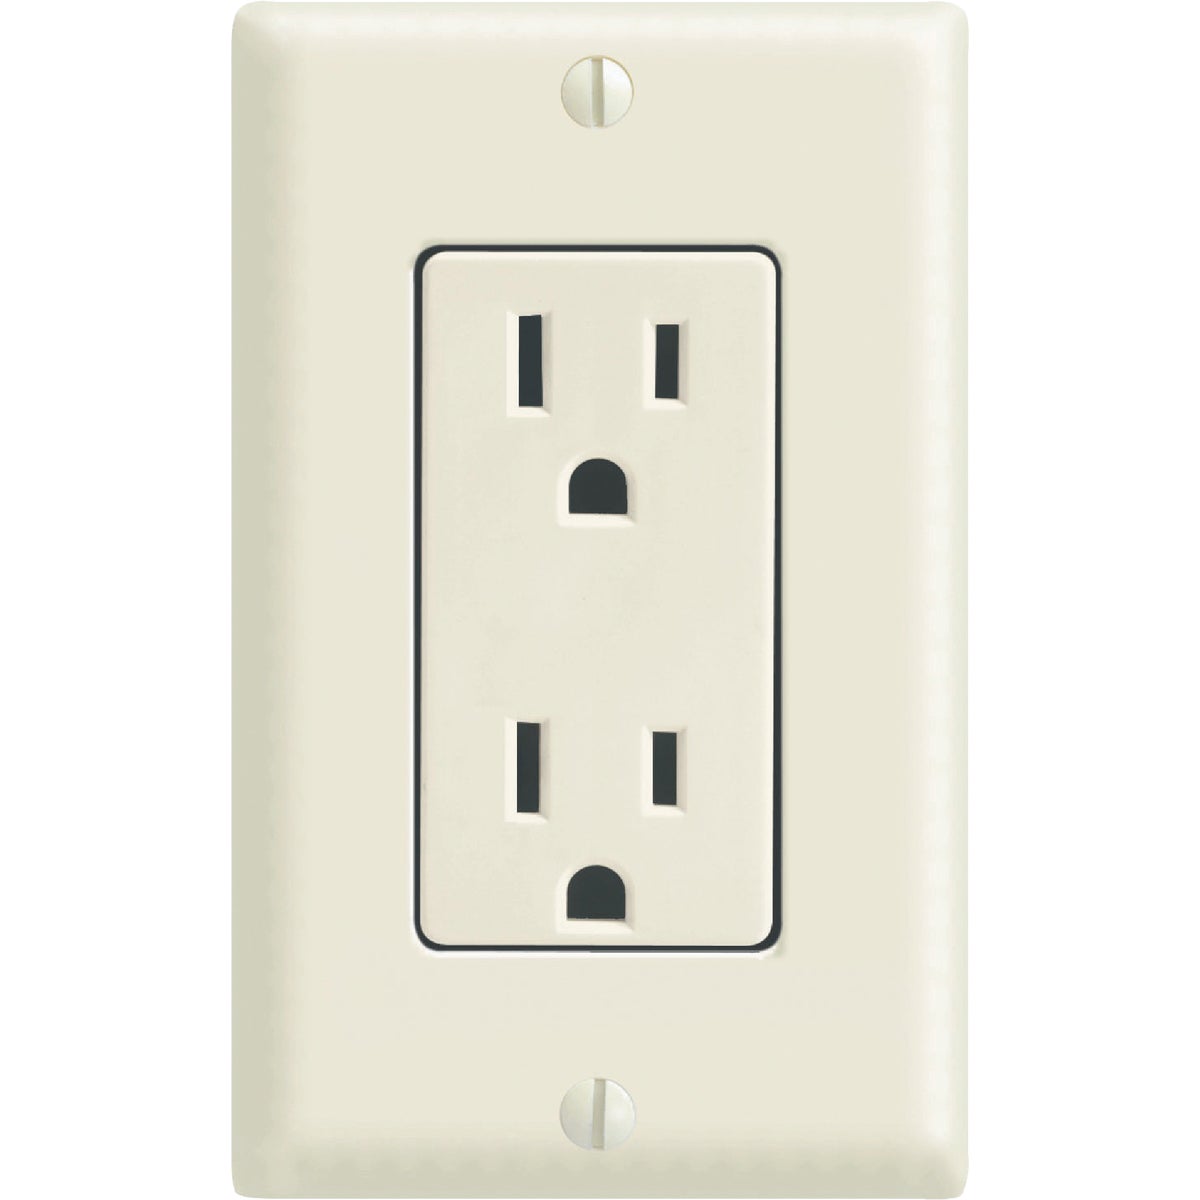 Item 501265, Decora duplex outlet. Designed to match Decora switches.